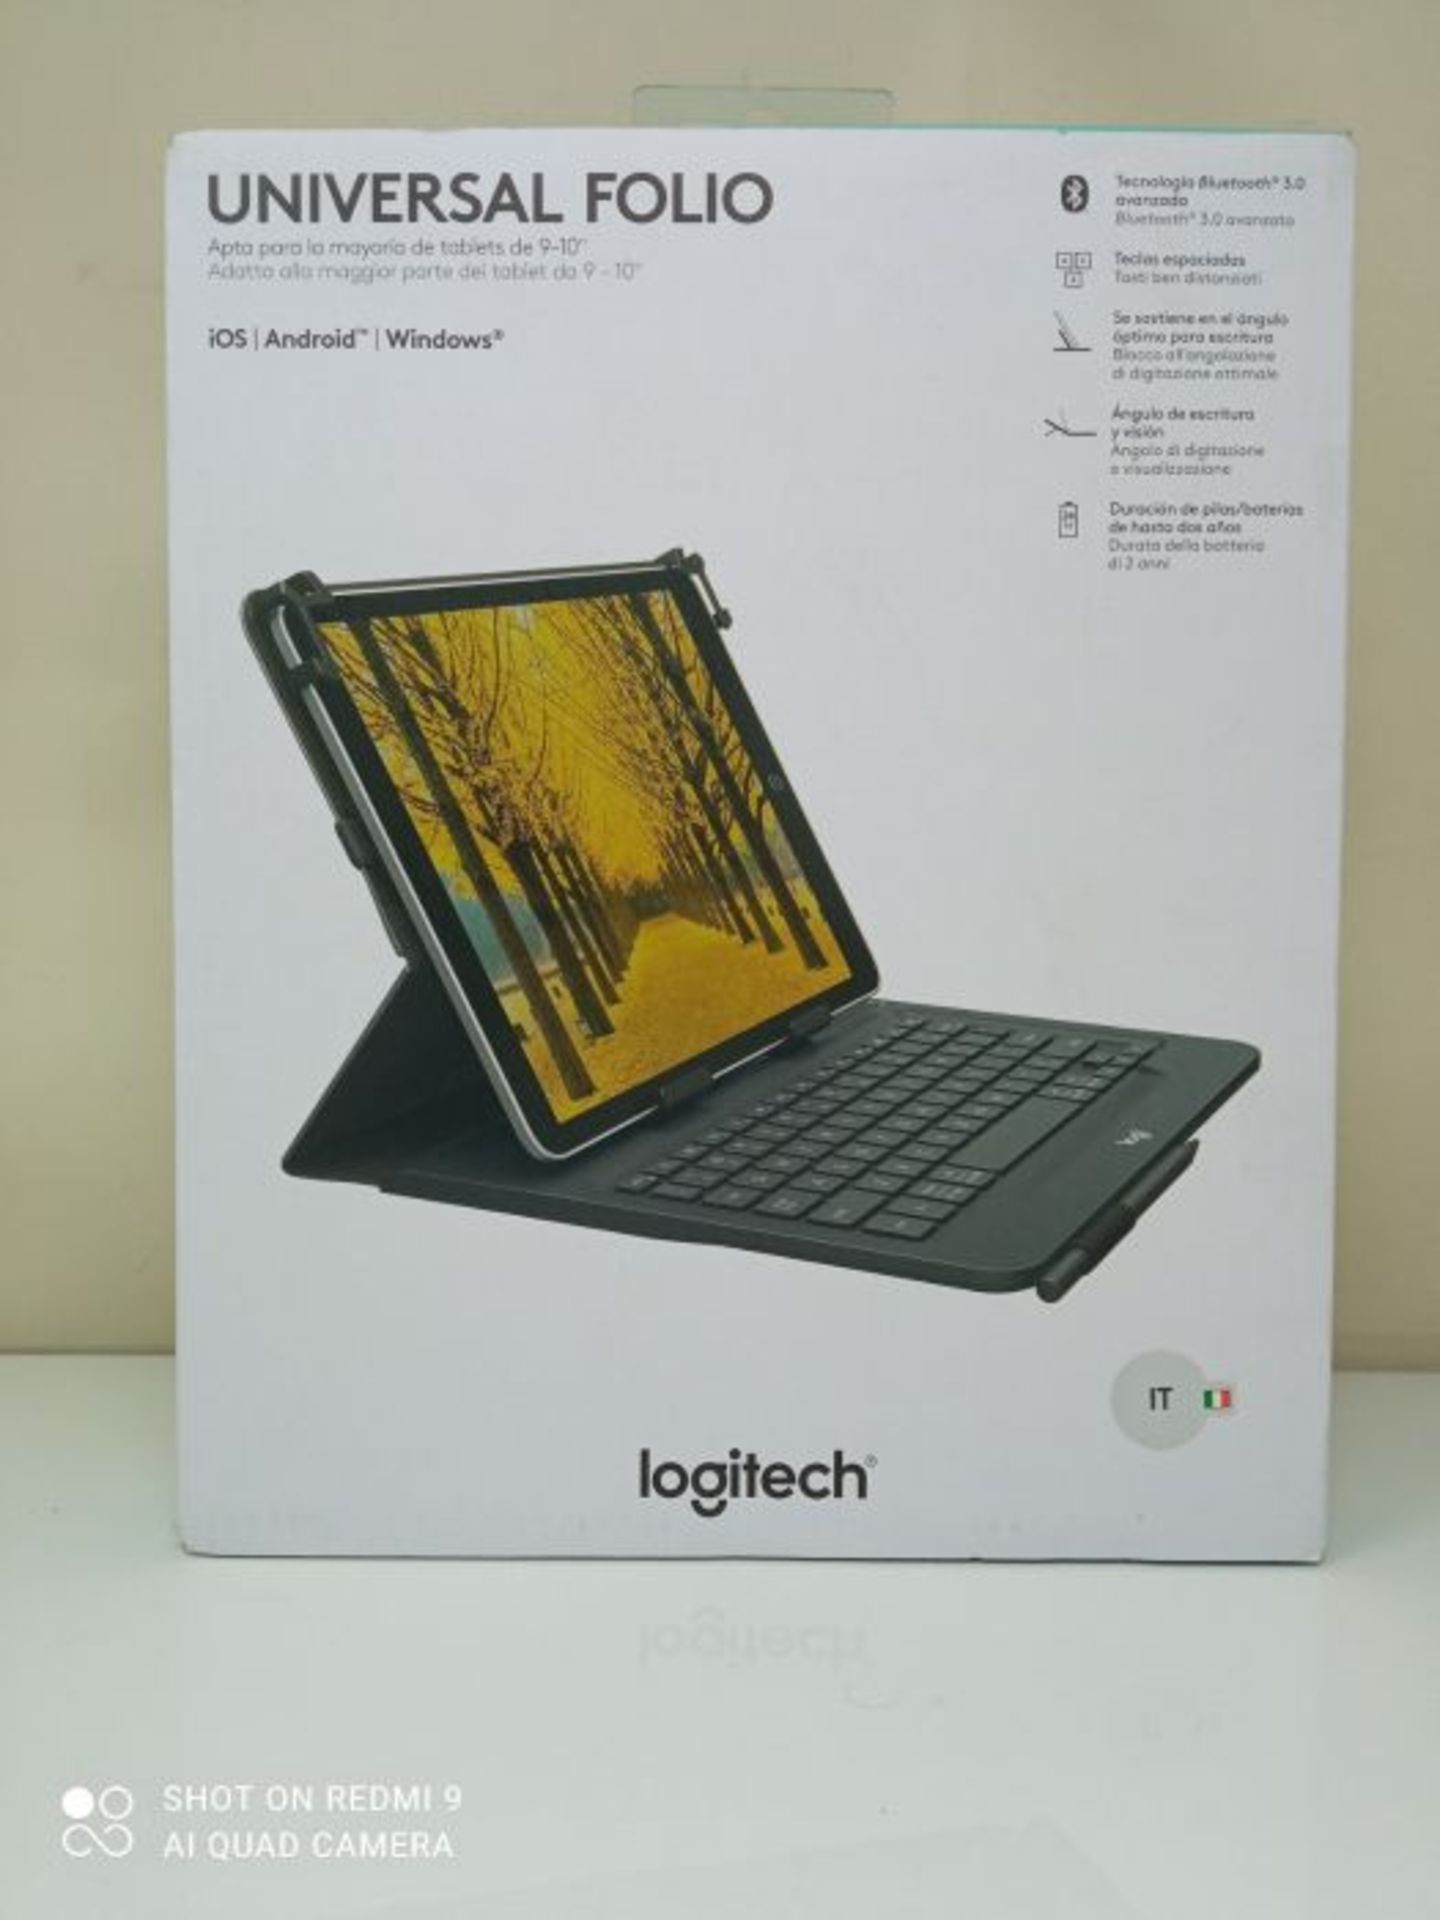 Logitech Universal Folio iPad or Tablet Case, QWERTY Italian Layout - Black - Image 2 of 3